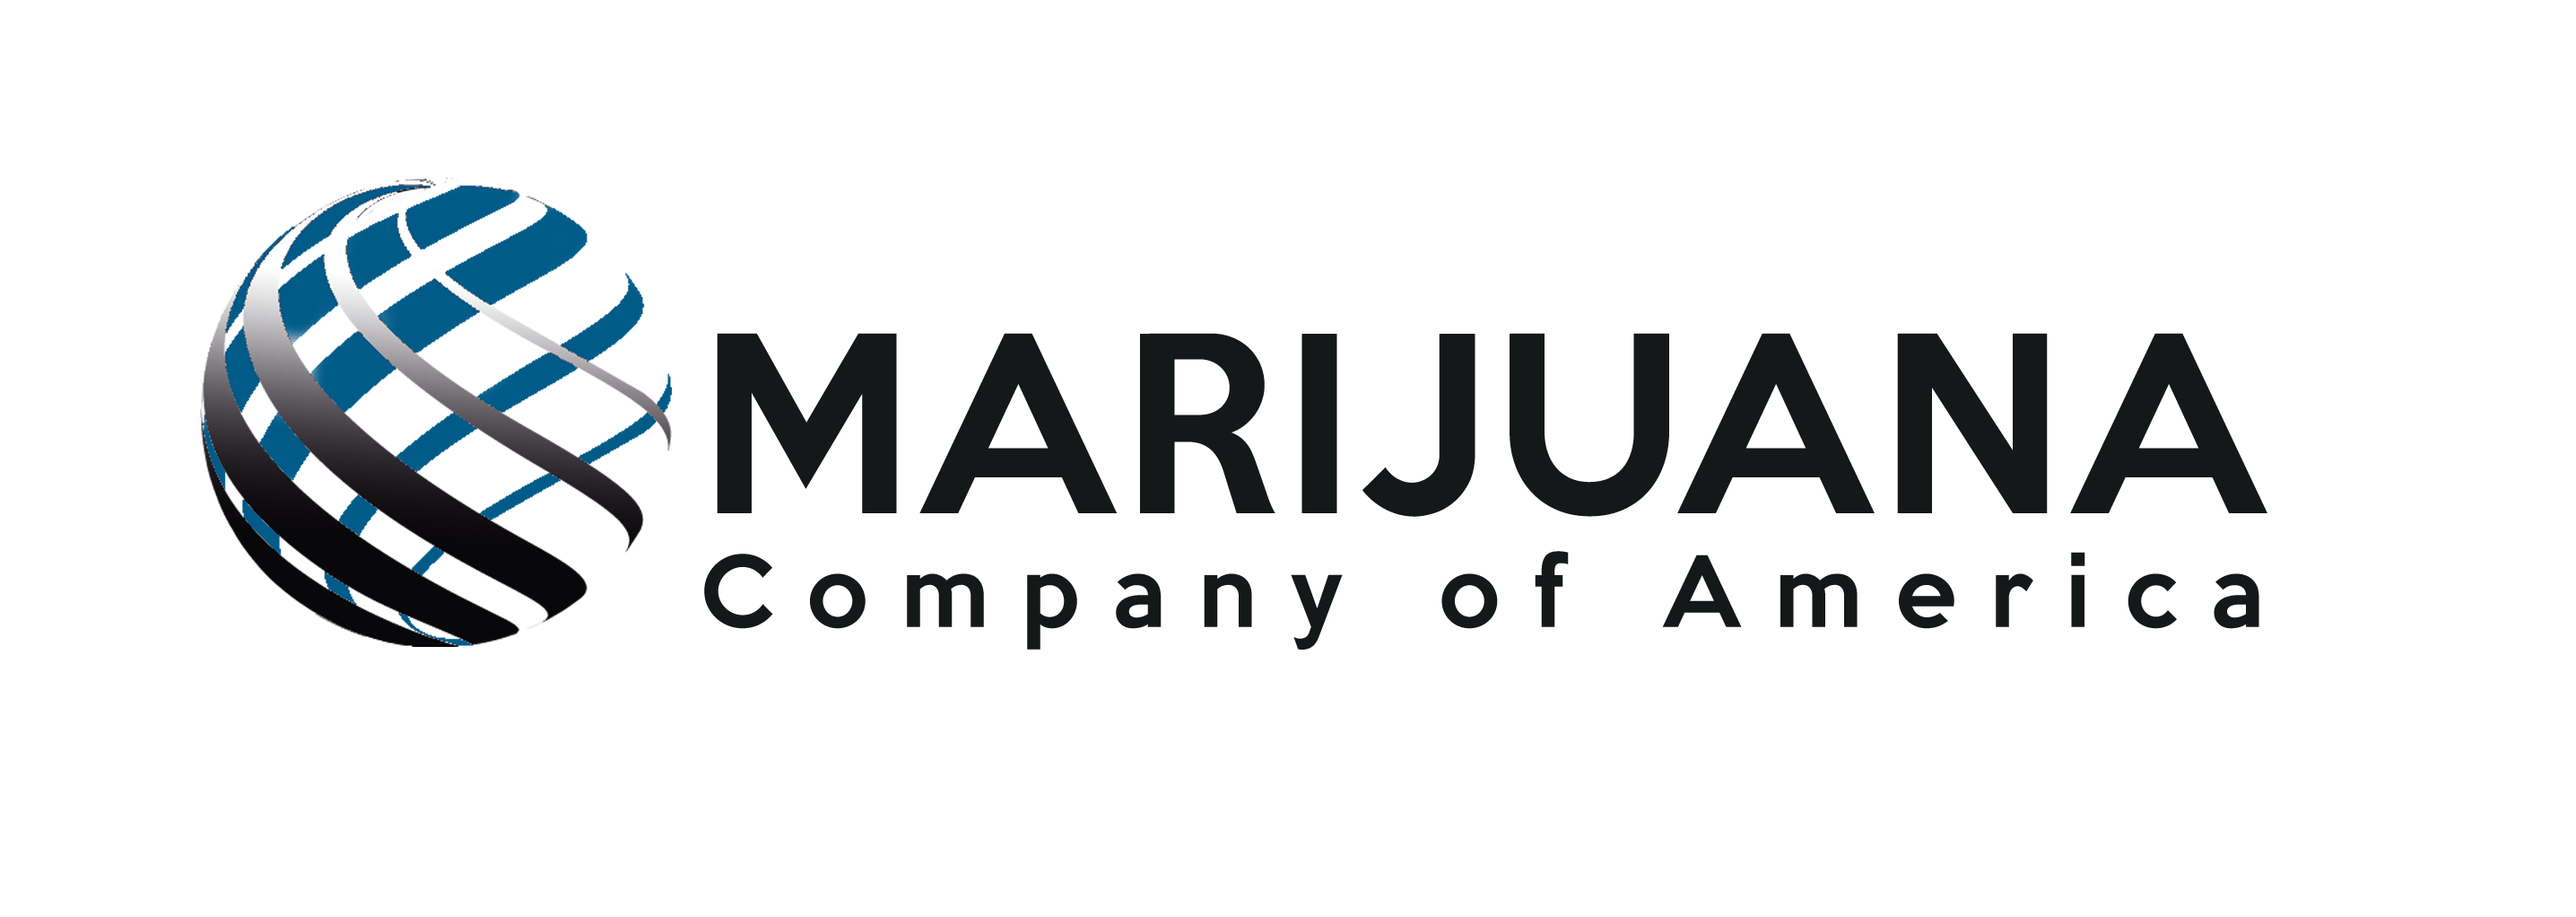 Marijuana Company of America, Inc., Wednesday, May 26, 2021, Press release picture